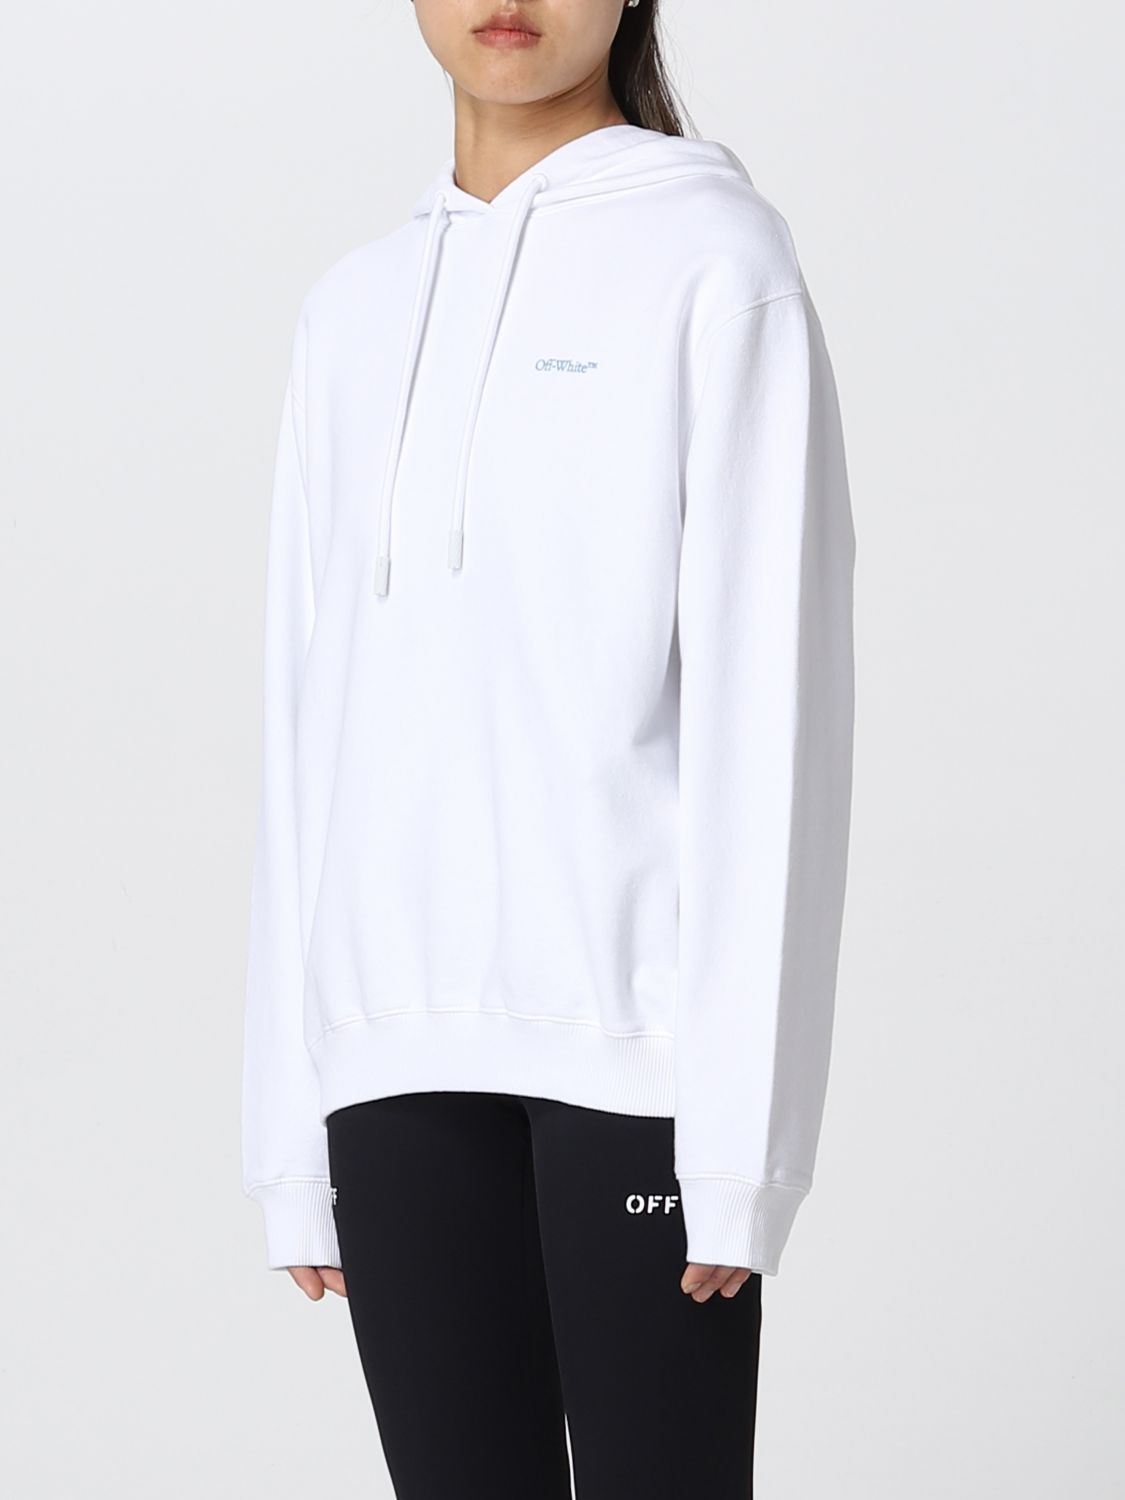 Off-White on Instagram: “Off-White™ multicolour sweater, wrap